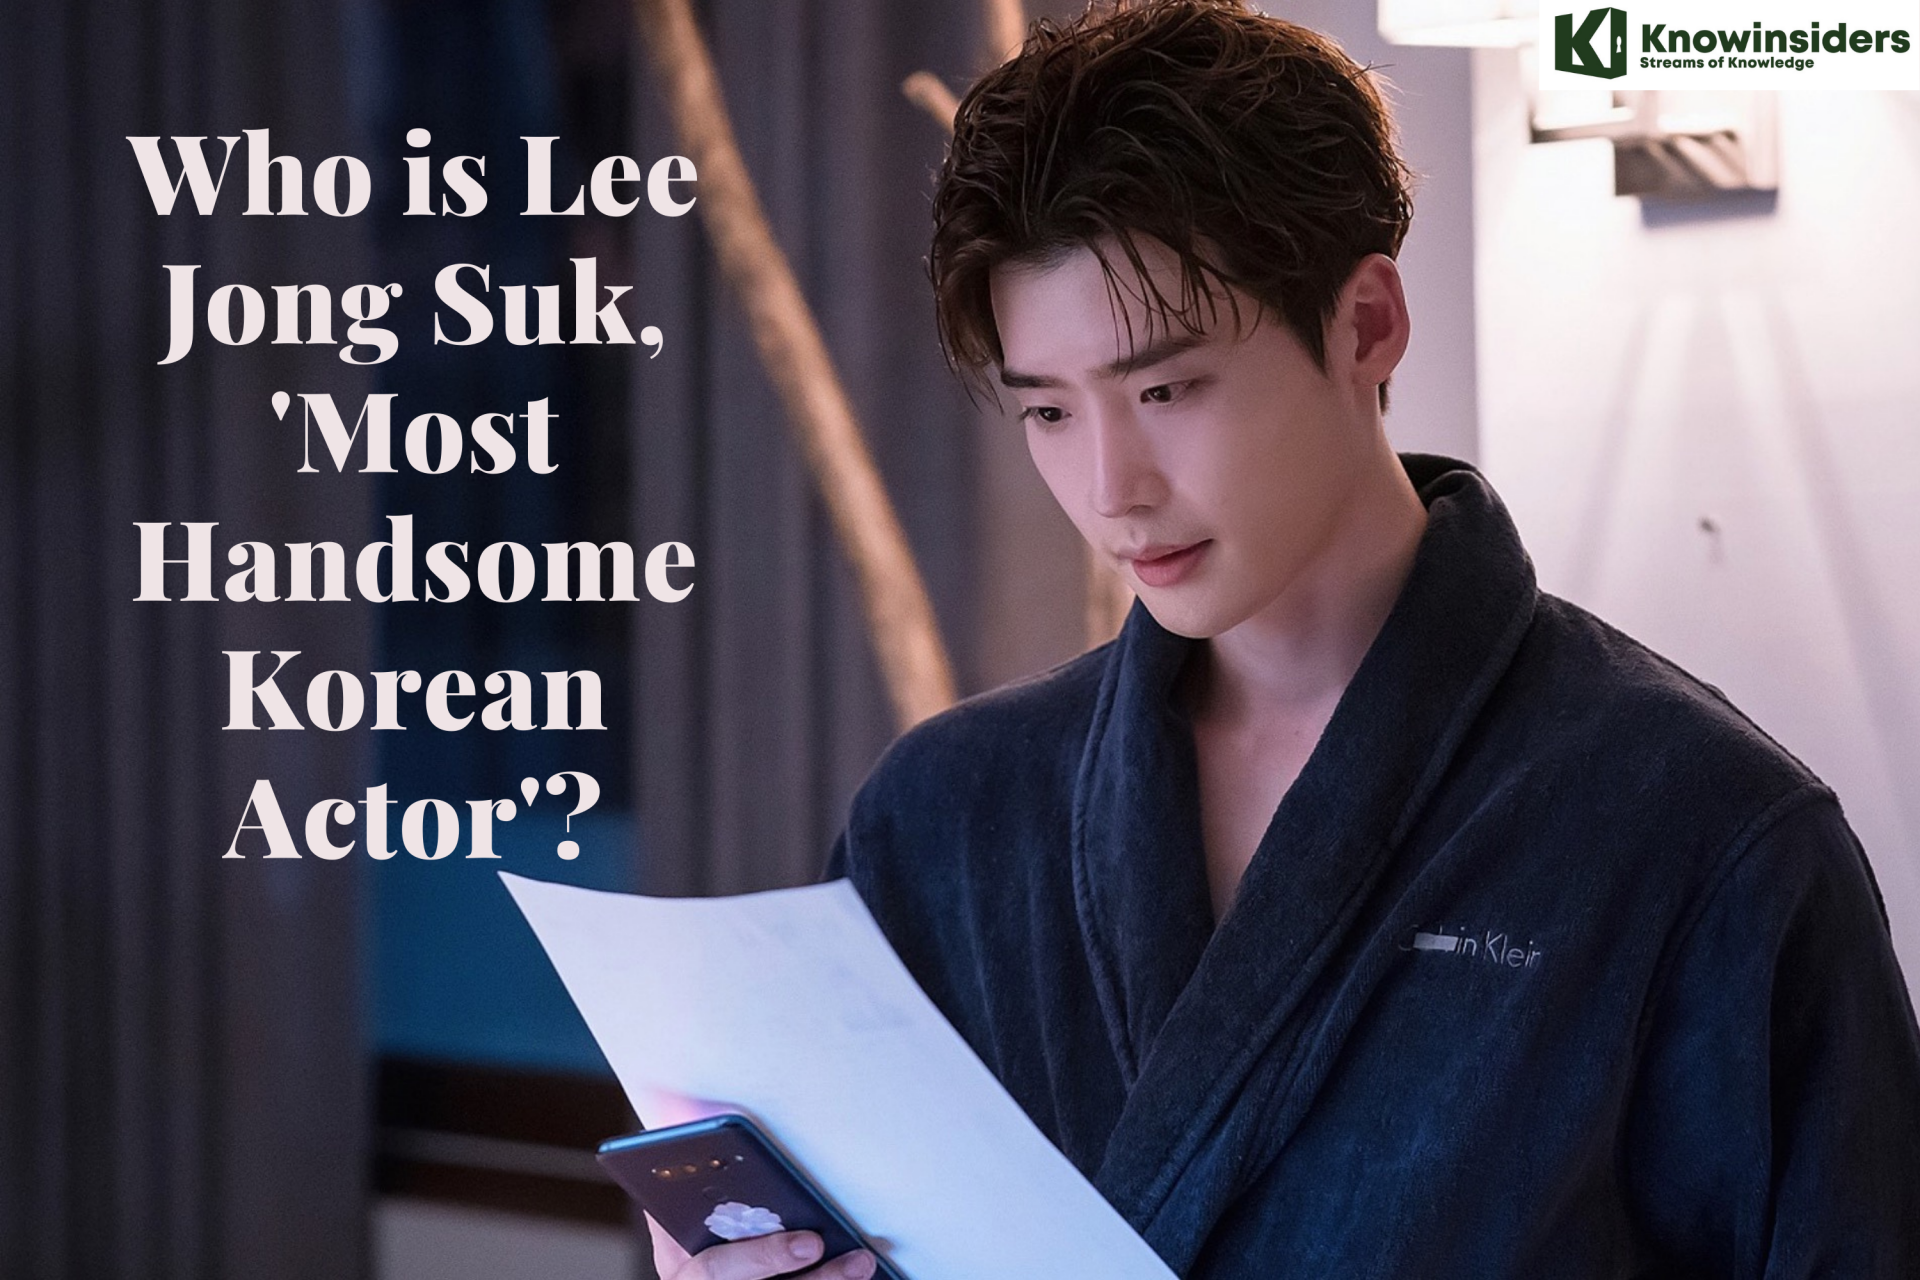 Who is Lee Jong Suk - 'Most Handsome Korean Actor': Surpassed Hyun Bin, Lee Min Ho and Song Joong Ki